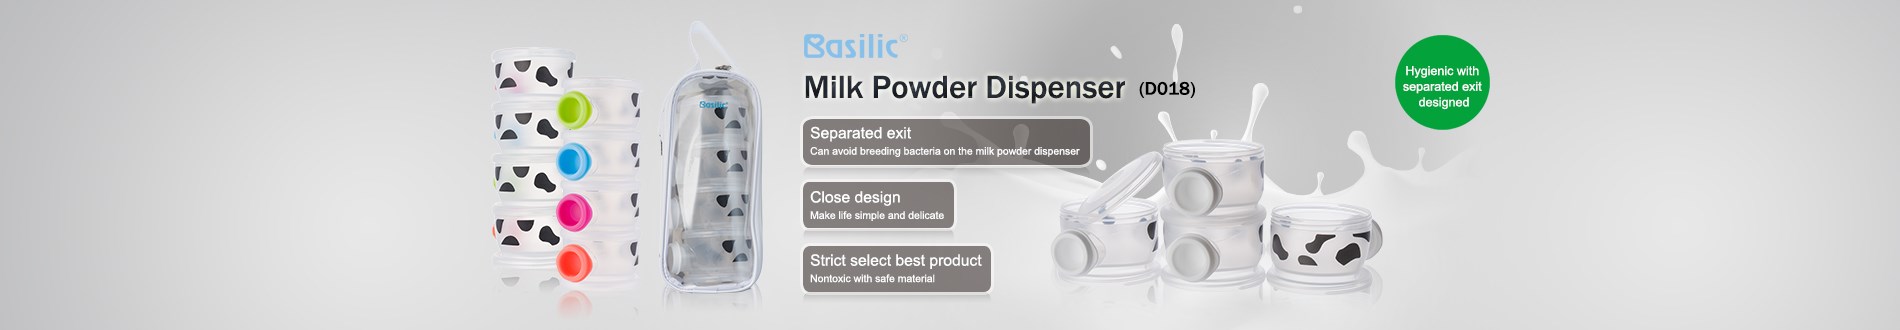 Milk powder dispenser (D018)